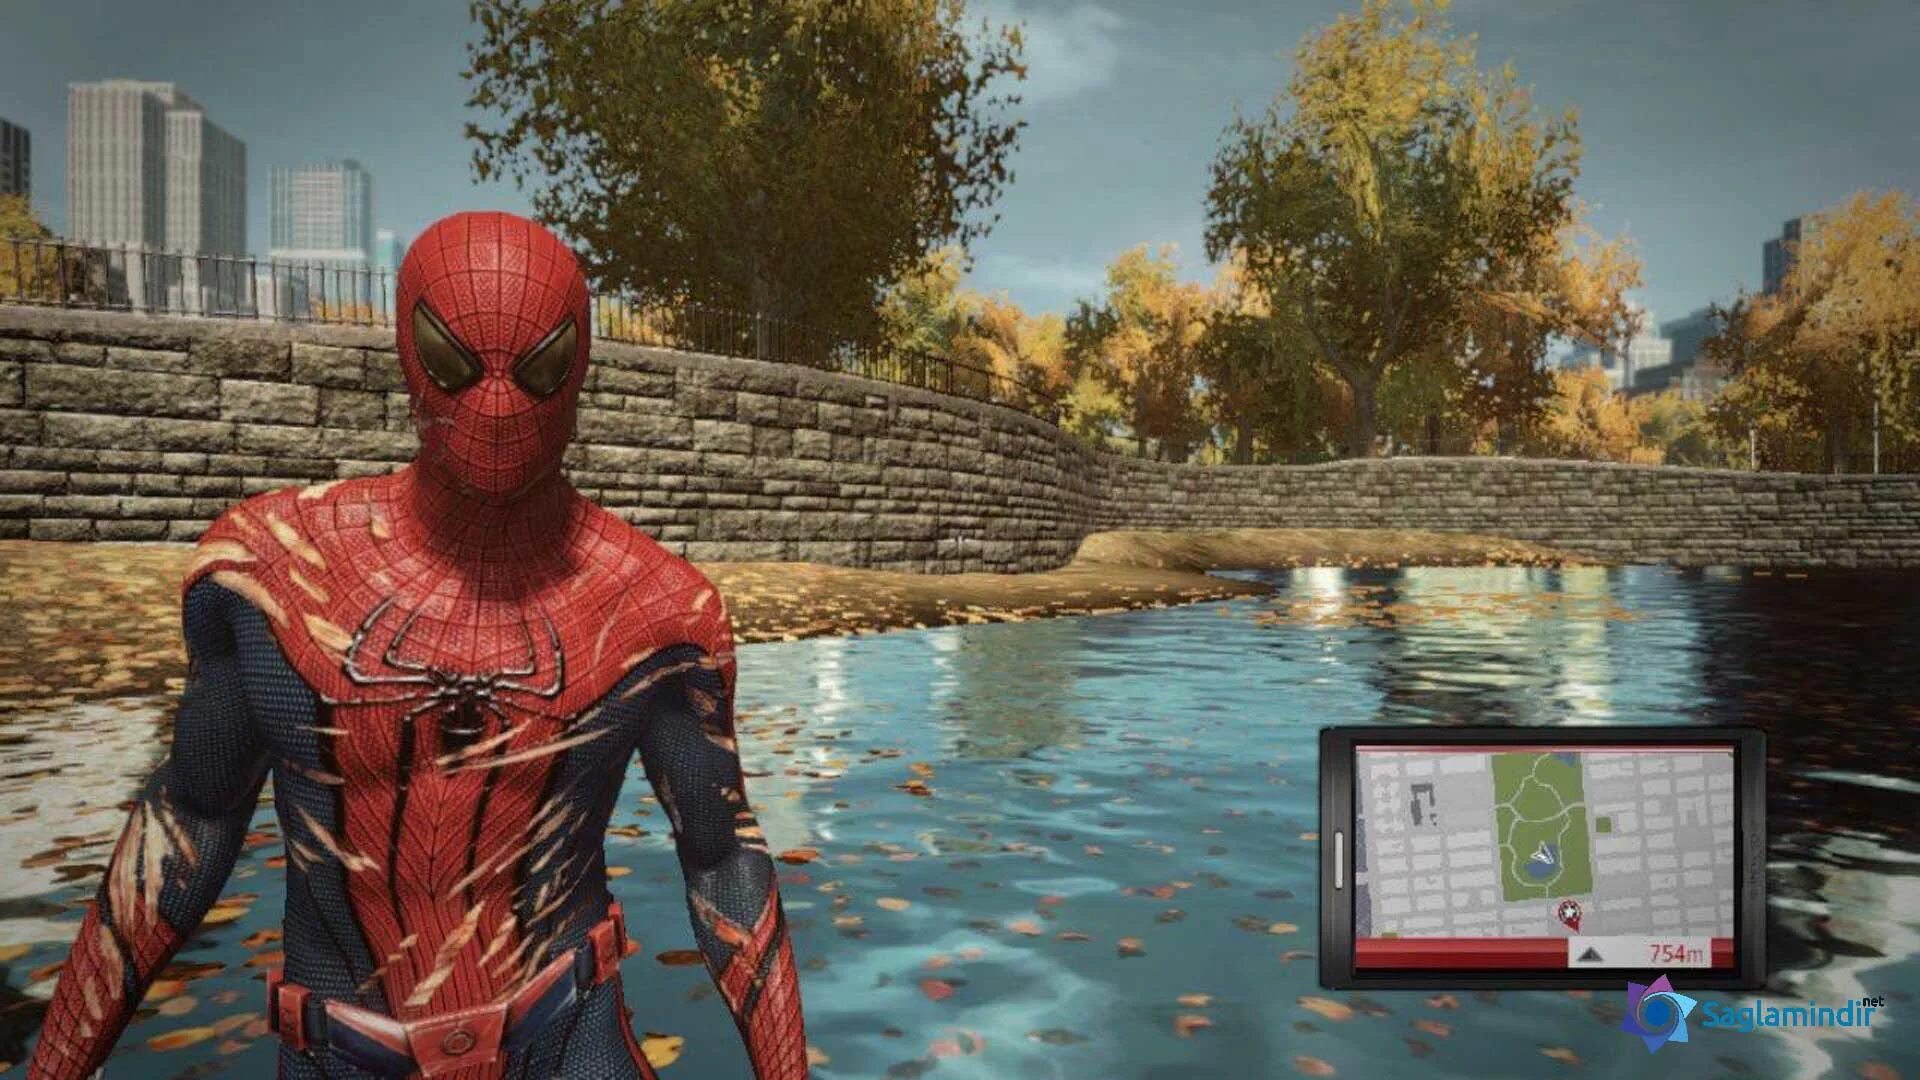 Man this game. The amazing Spider-man игра. Эмейзинг человек паук 1. The amazing Spider-man 2 игра. The amazing Spider-man 1 игра.